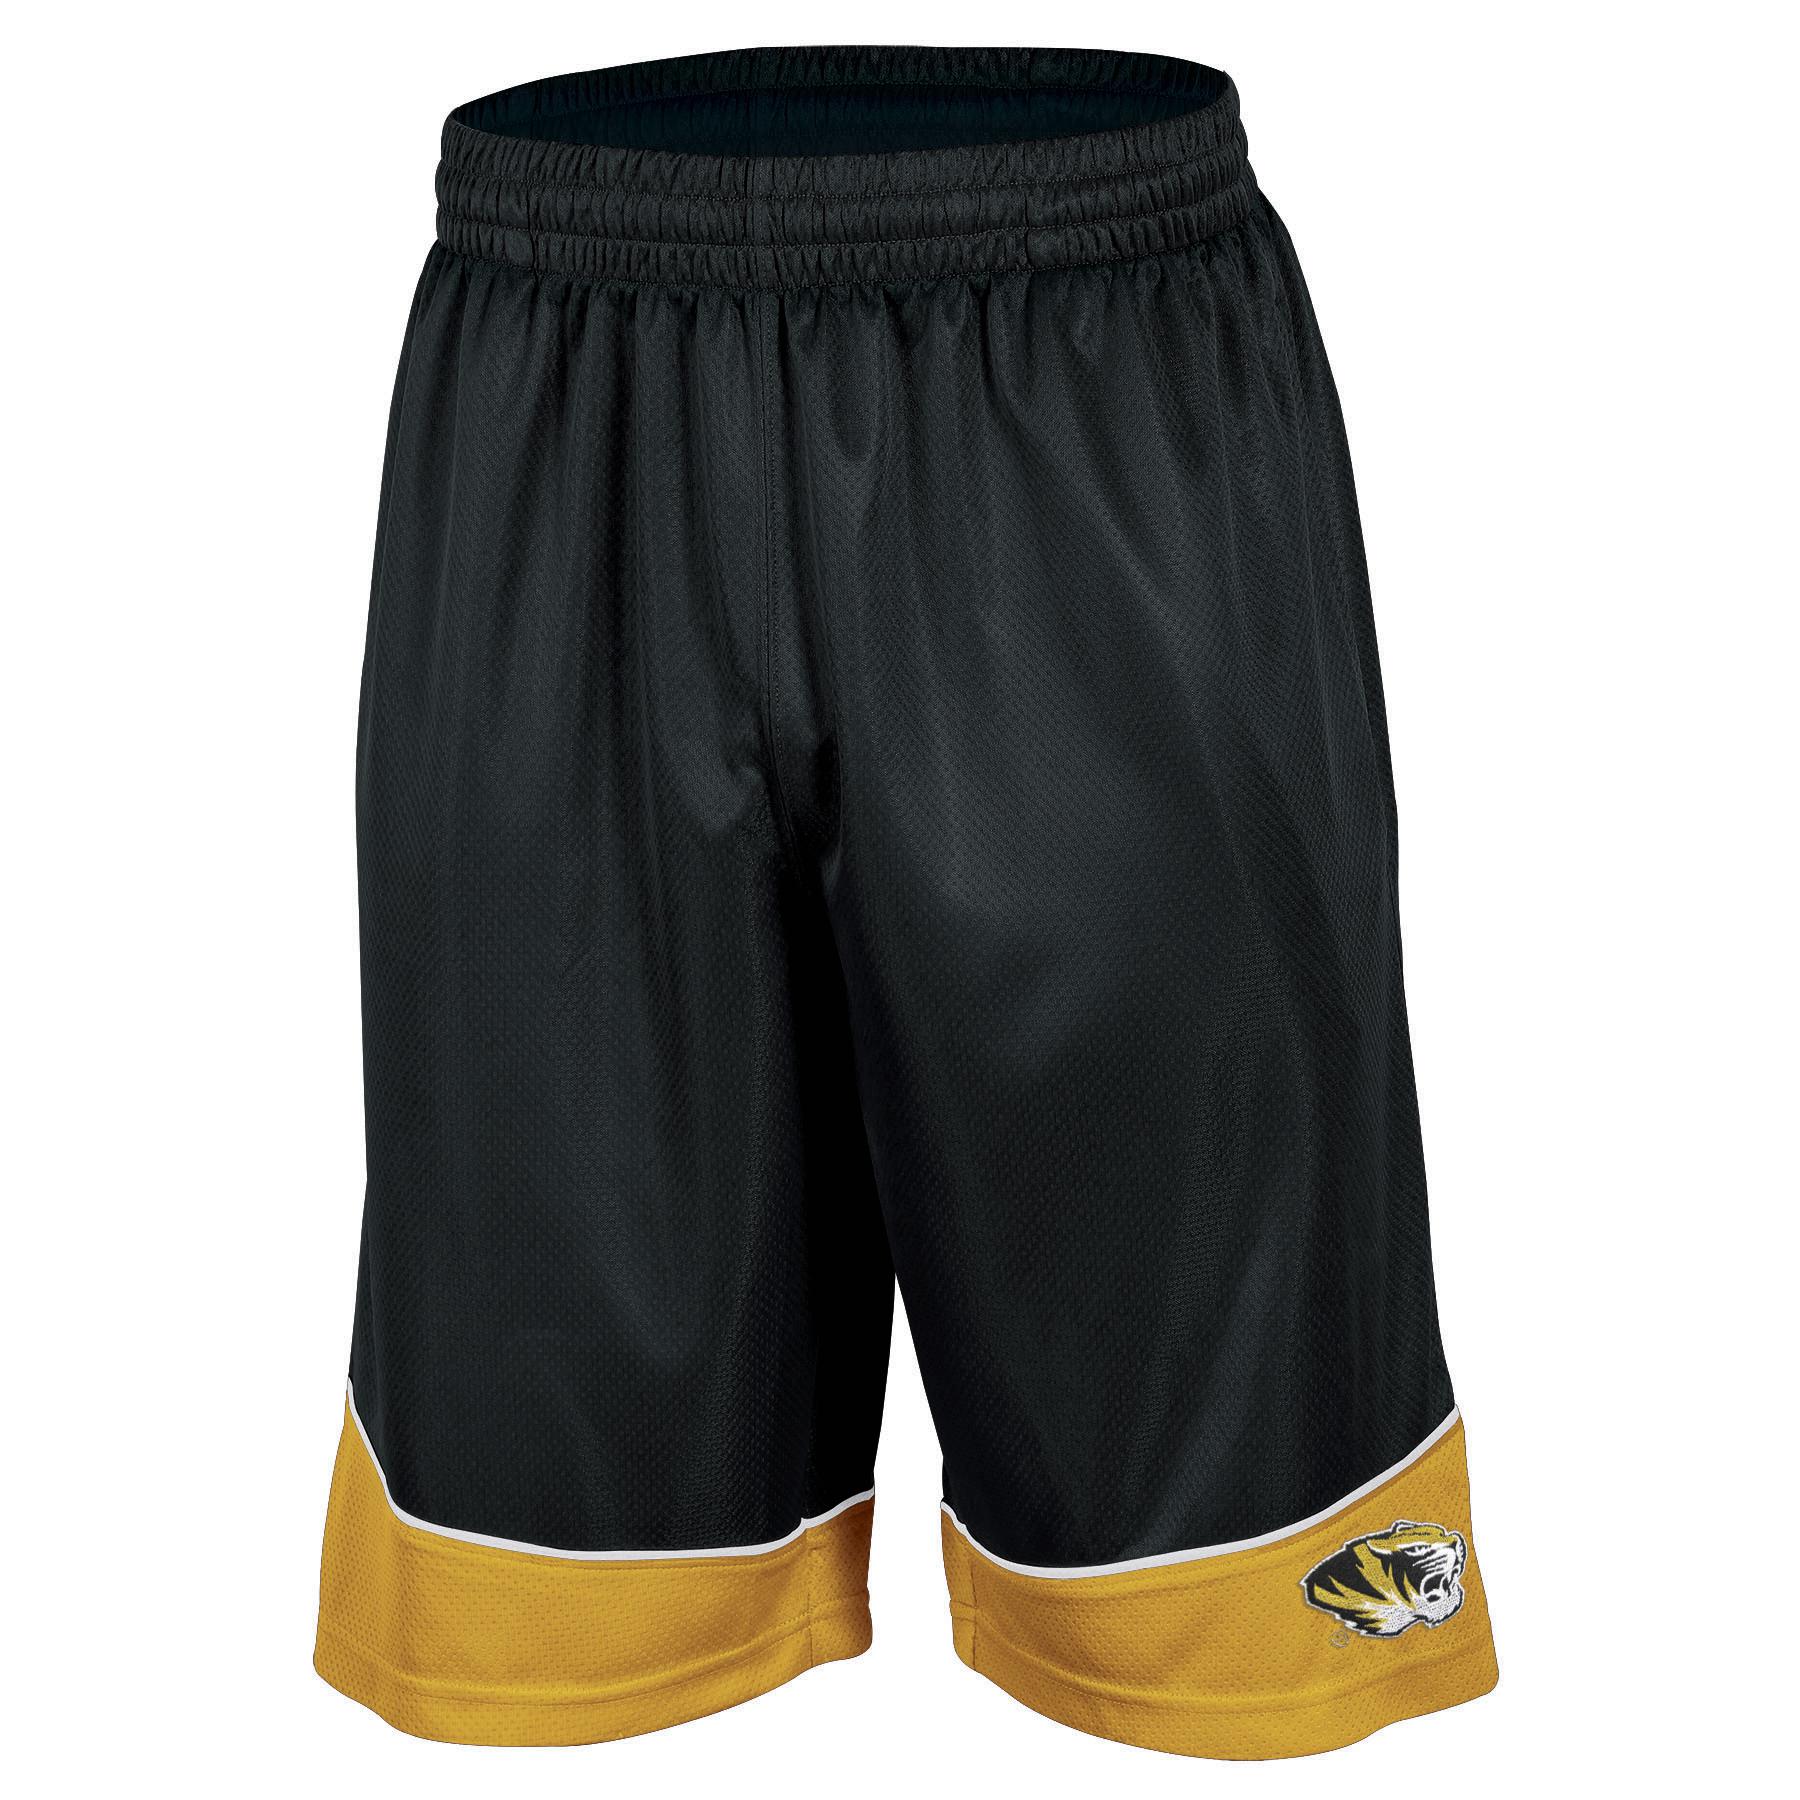 NCAA Men's Basketball Shorts - Missouri Tigers